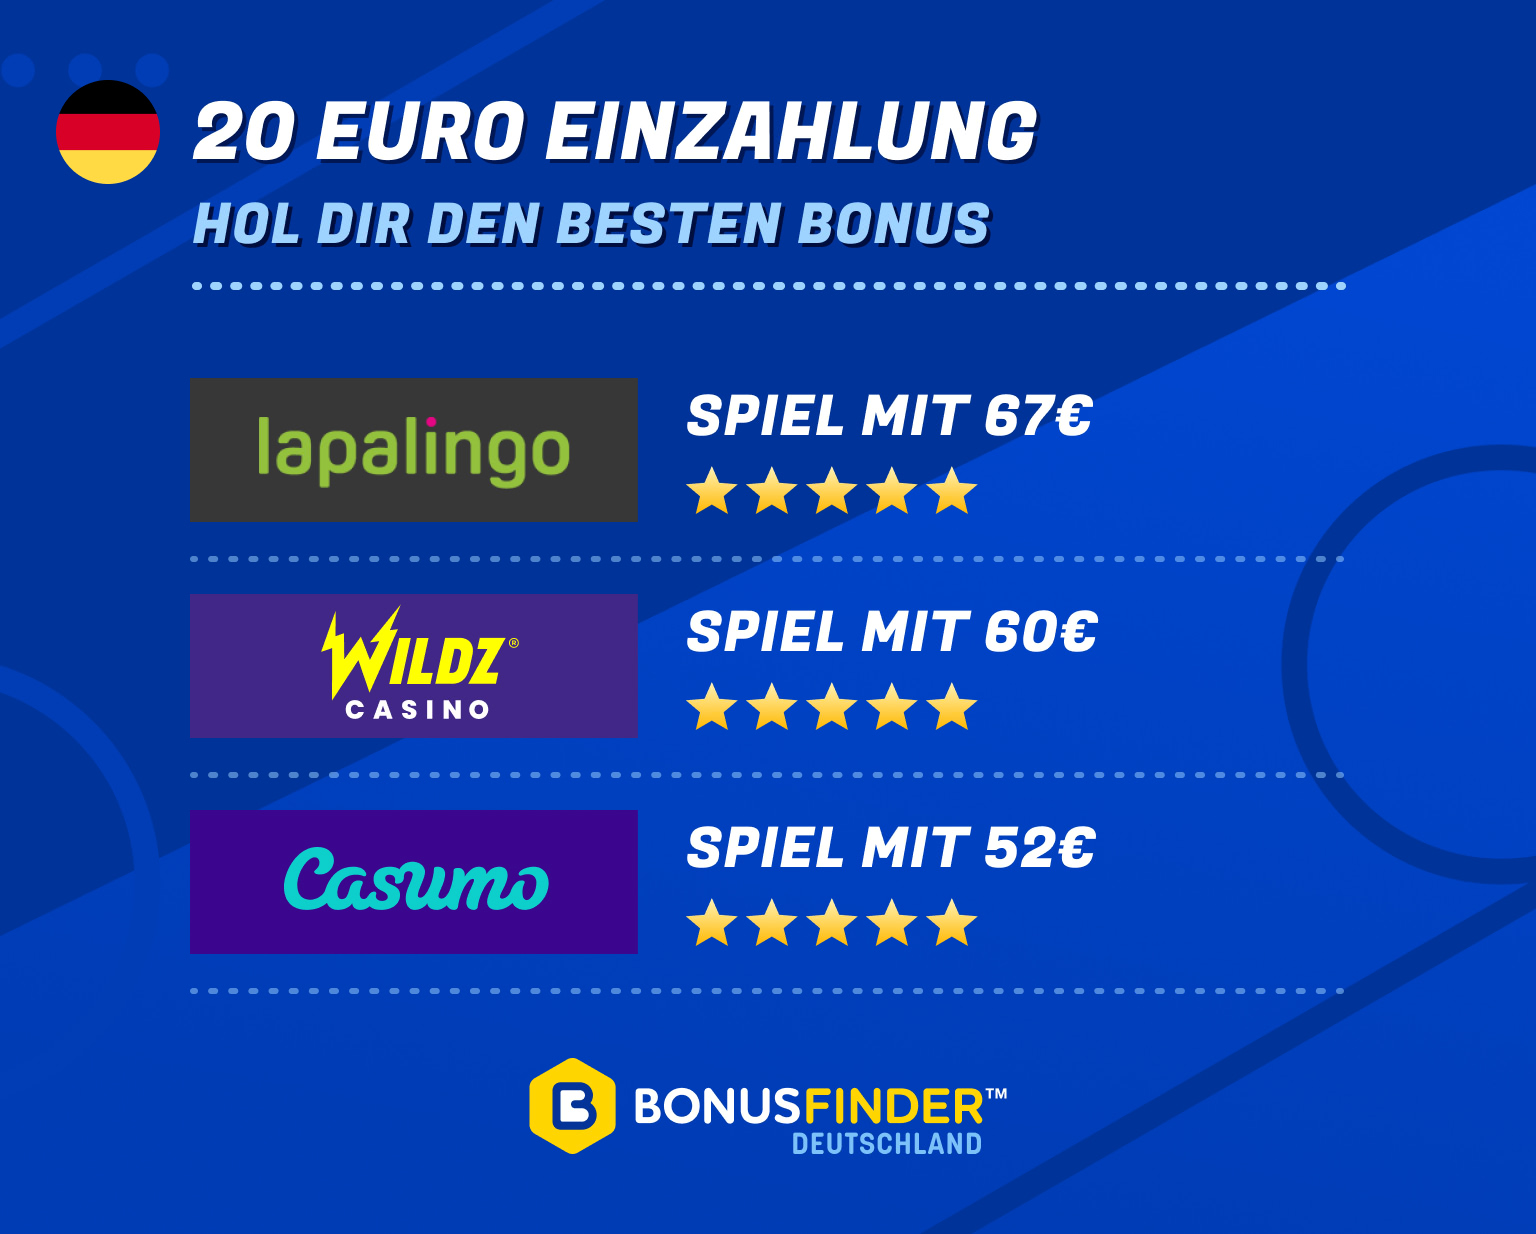 20-euro-einzahlung-casino